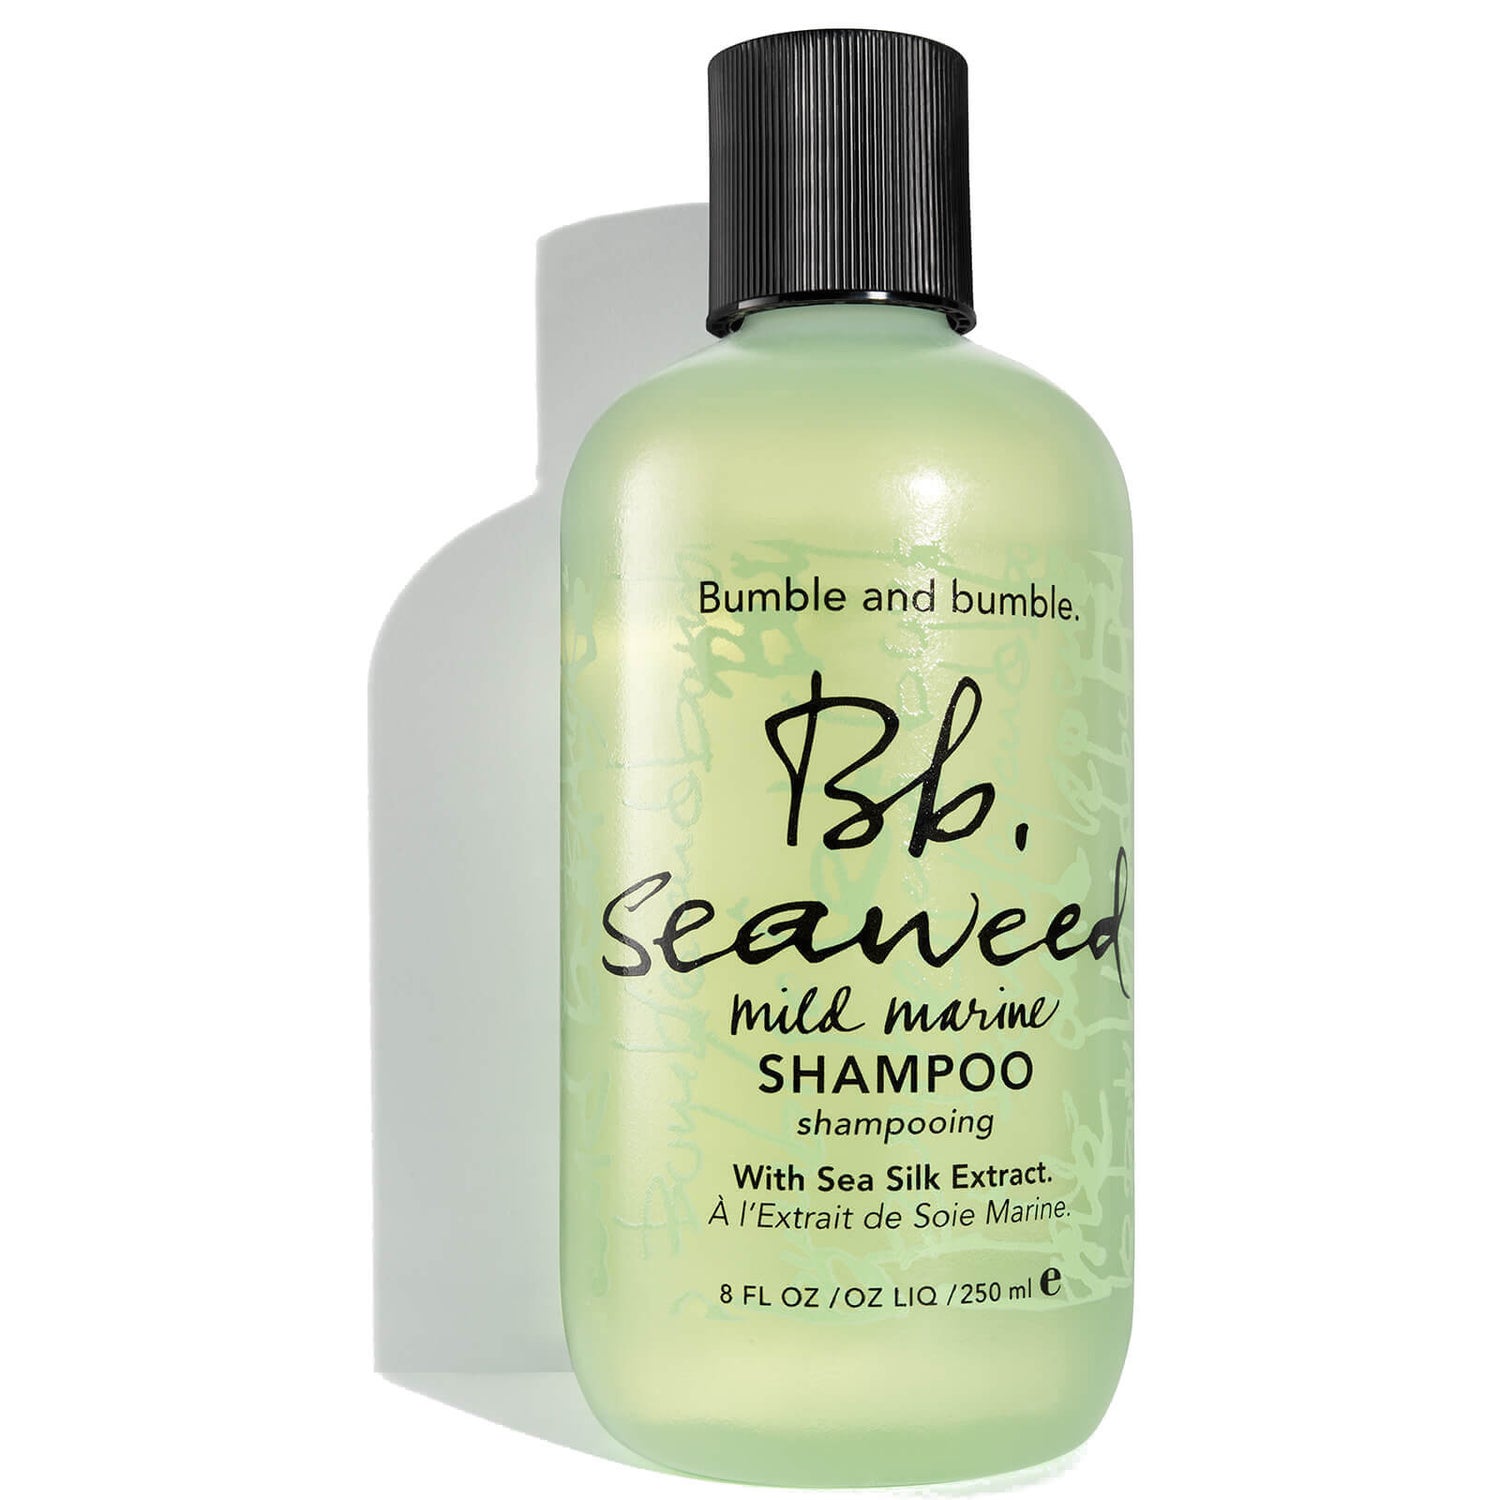 Bumble and bumble Seaweed Shampoo 250 ml